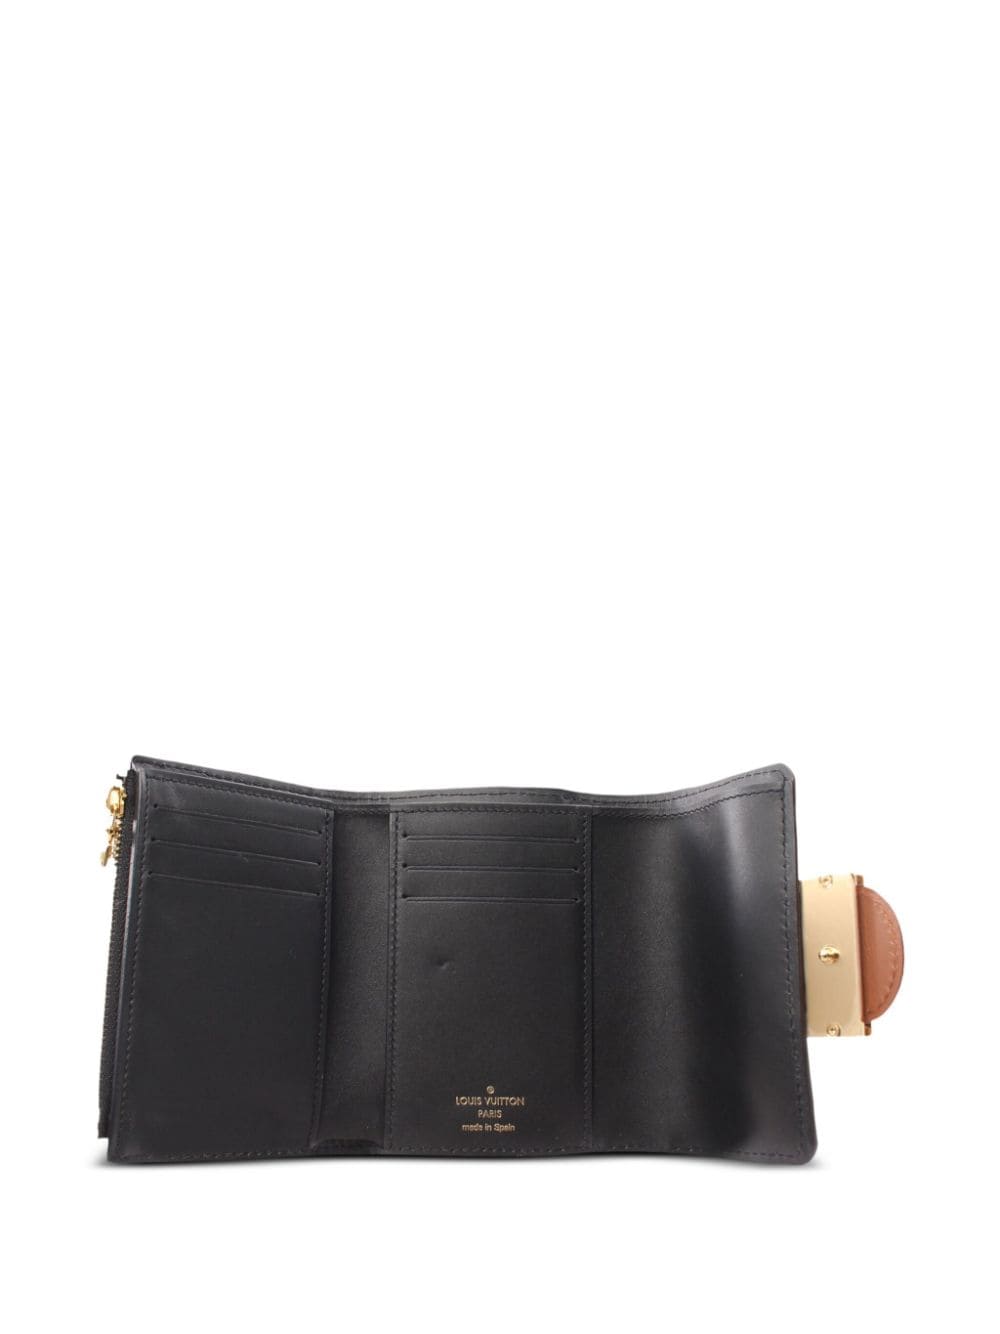 24S Louis Vuitton Christopher Wearable Wallet $1586.00